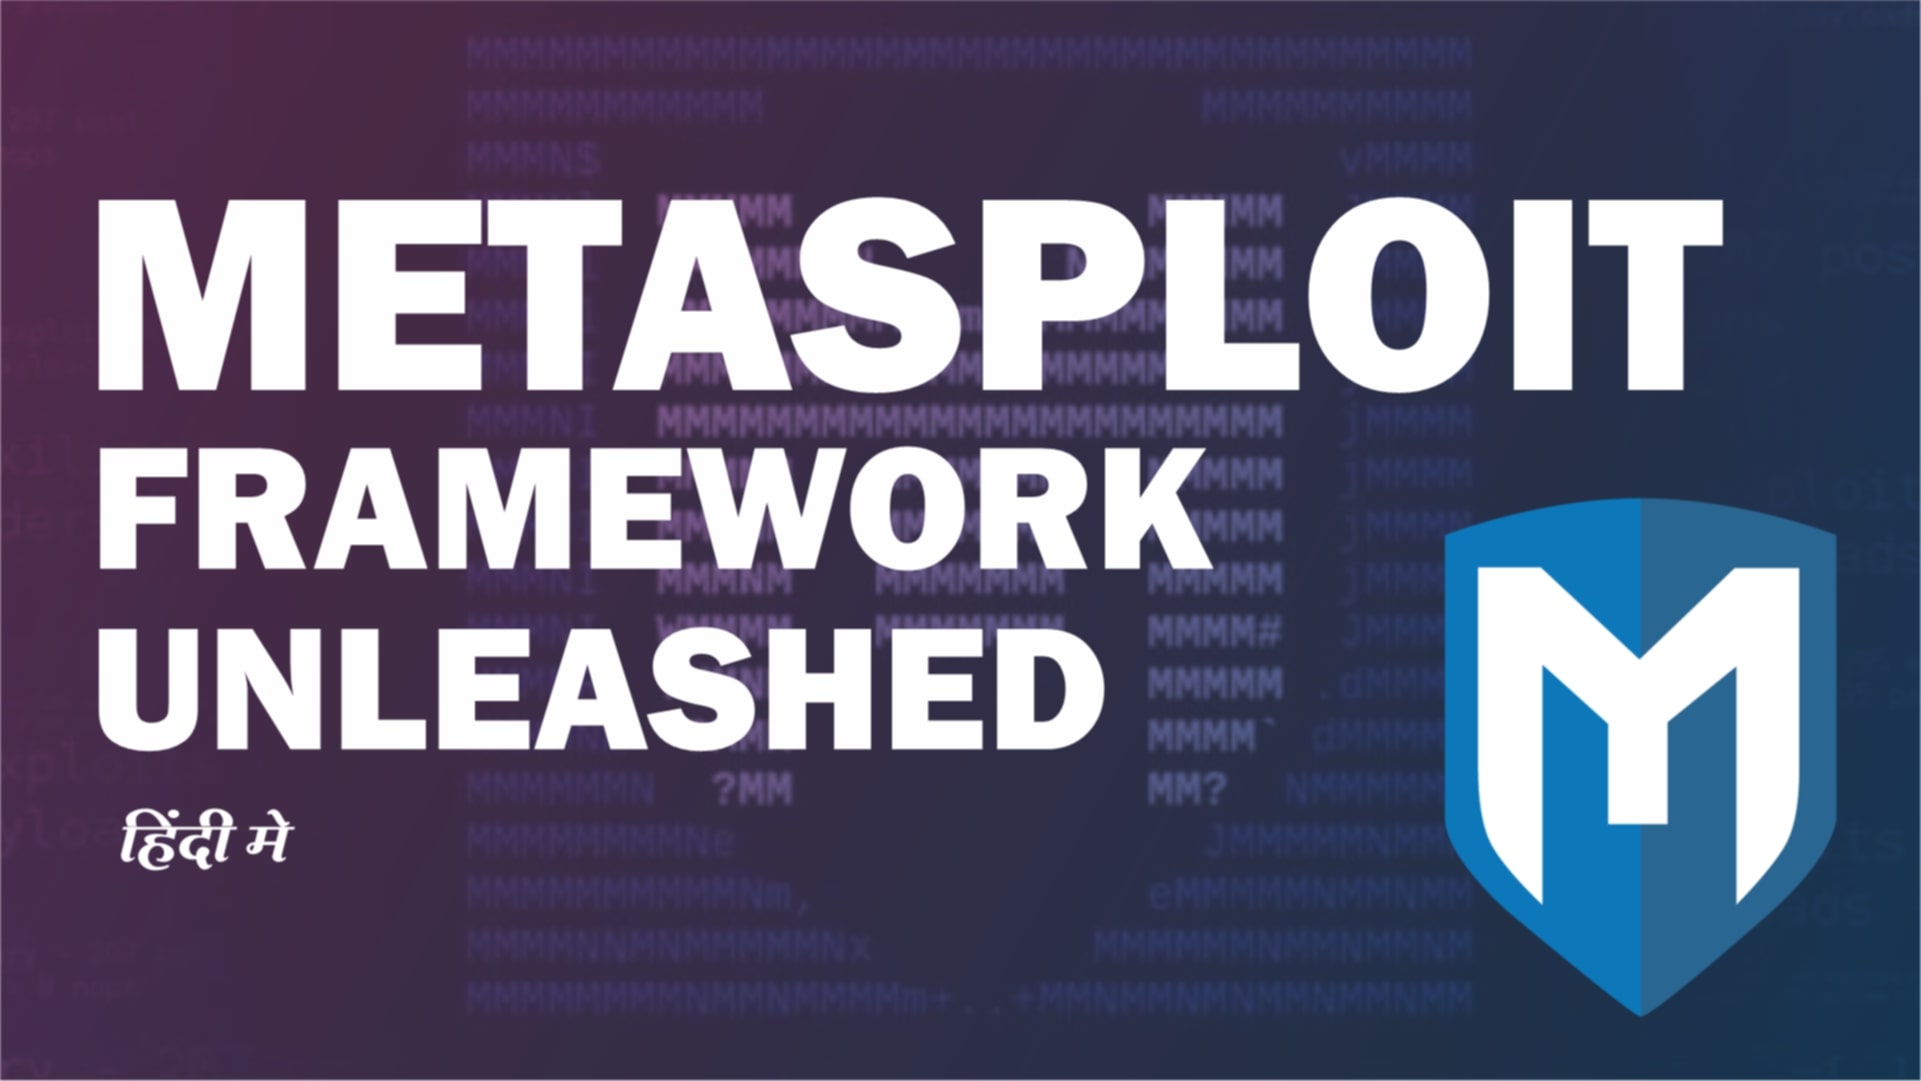 Metasploit Framework Unleashed